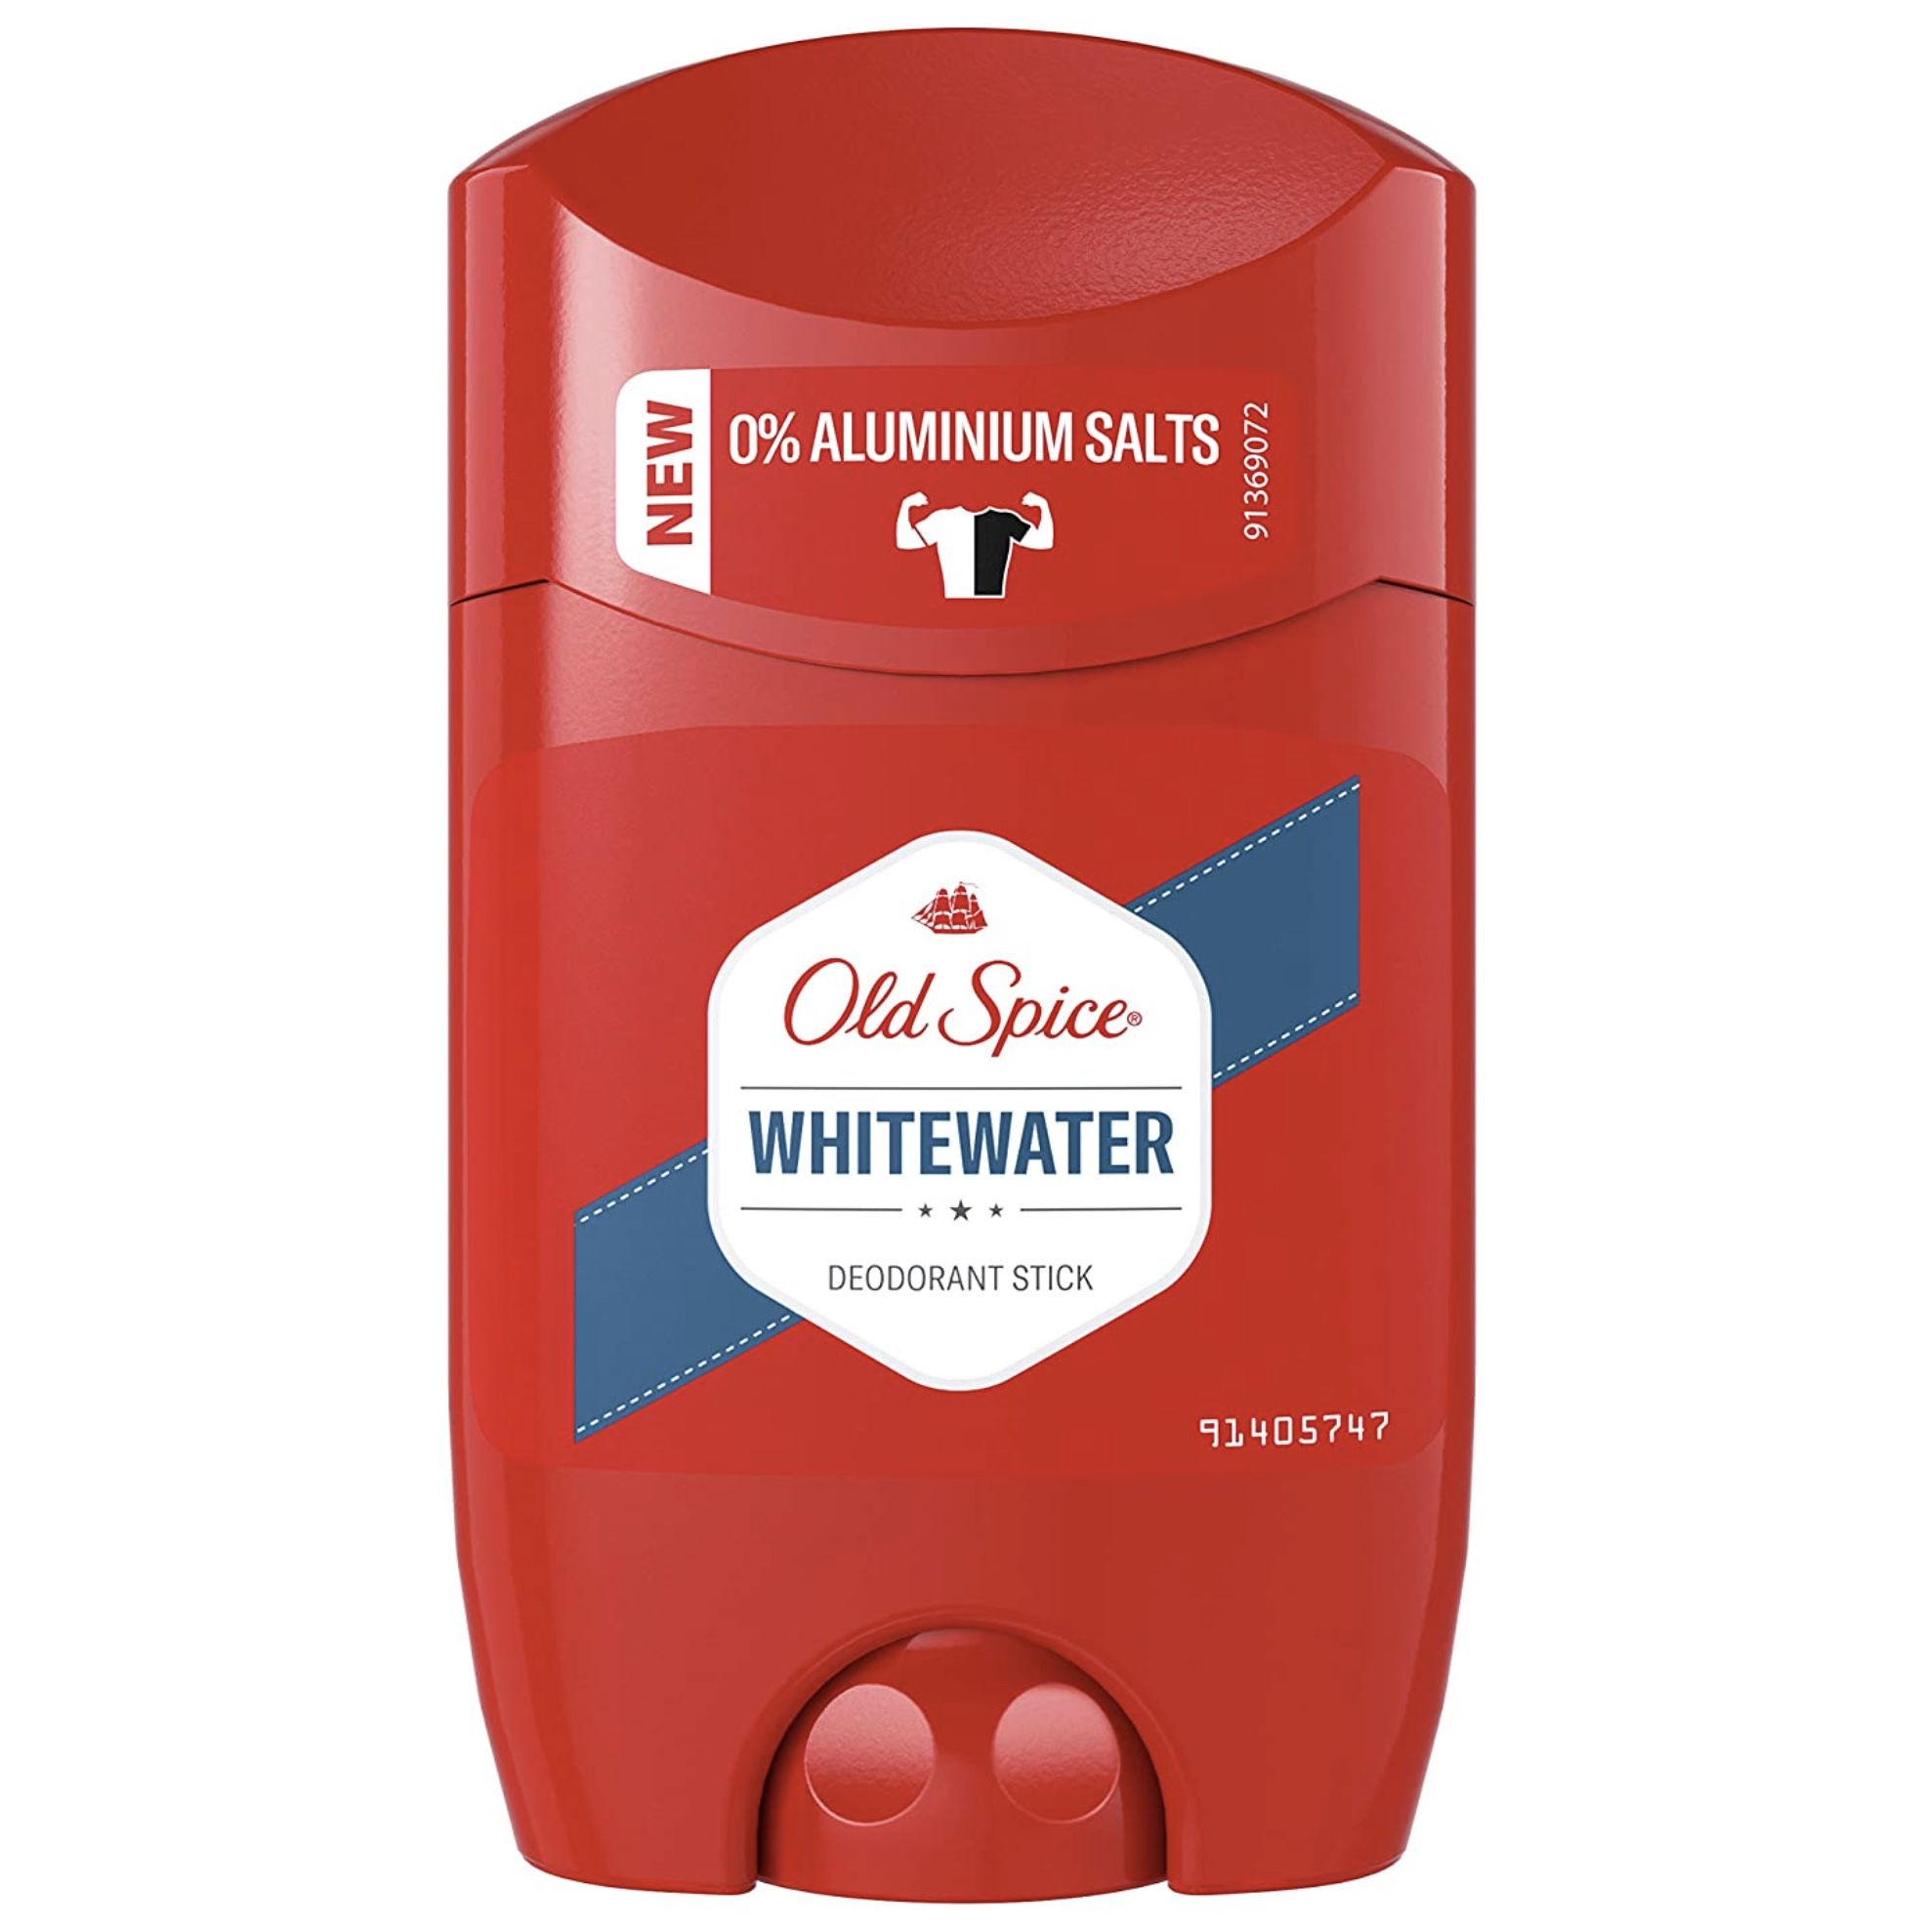 Old Spice Whitewater Deodorant Stick ohne Aluminium für 1,71€ (statt 2,59€)   Prime Sparabo